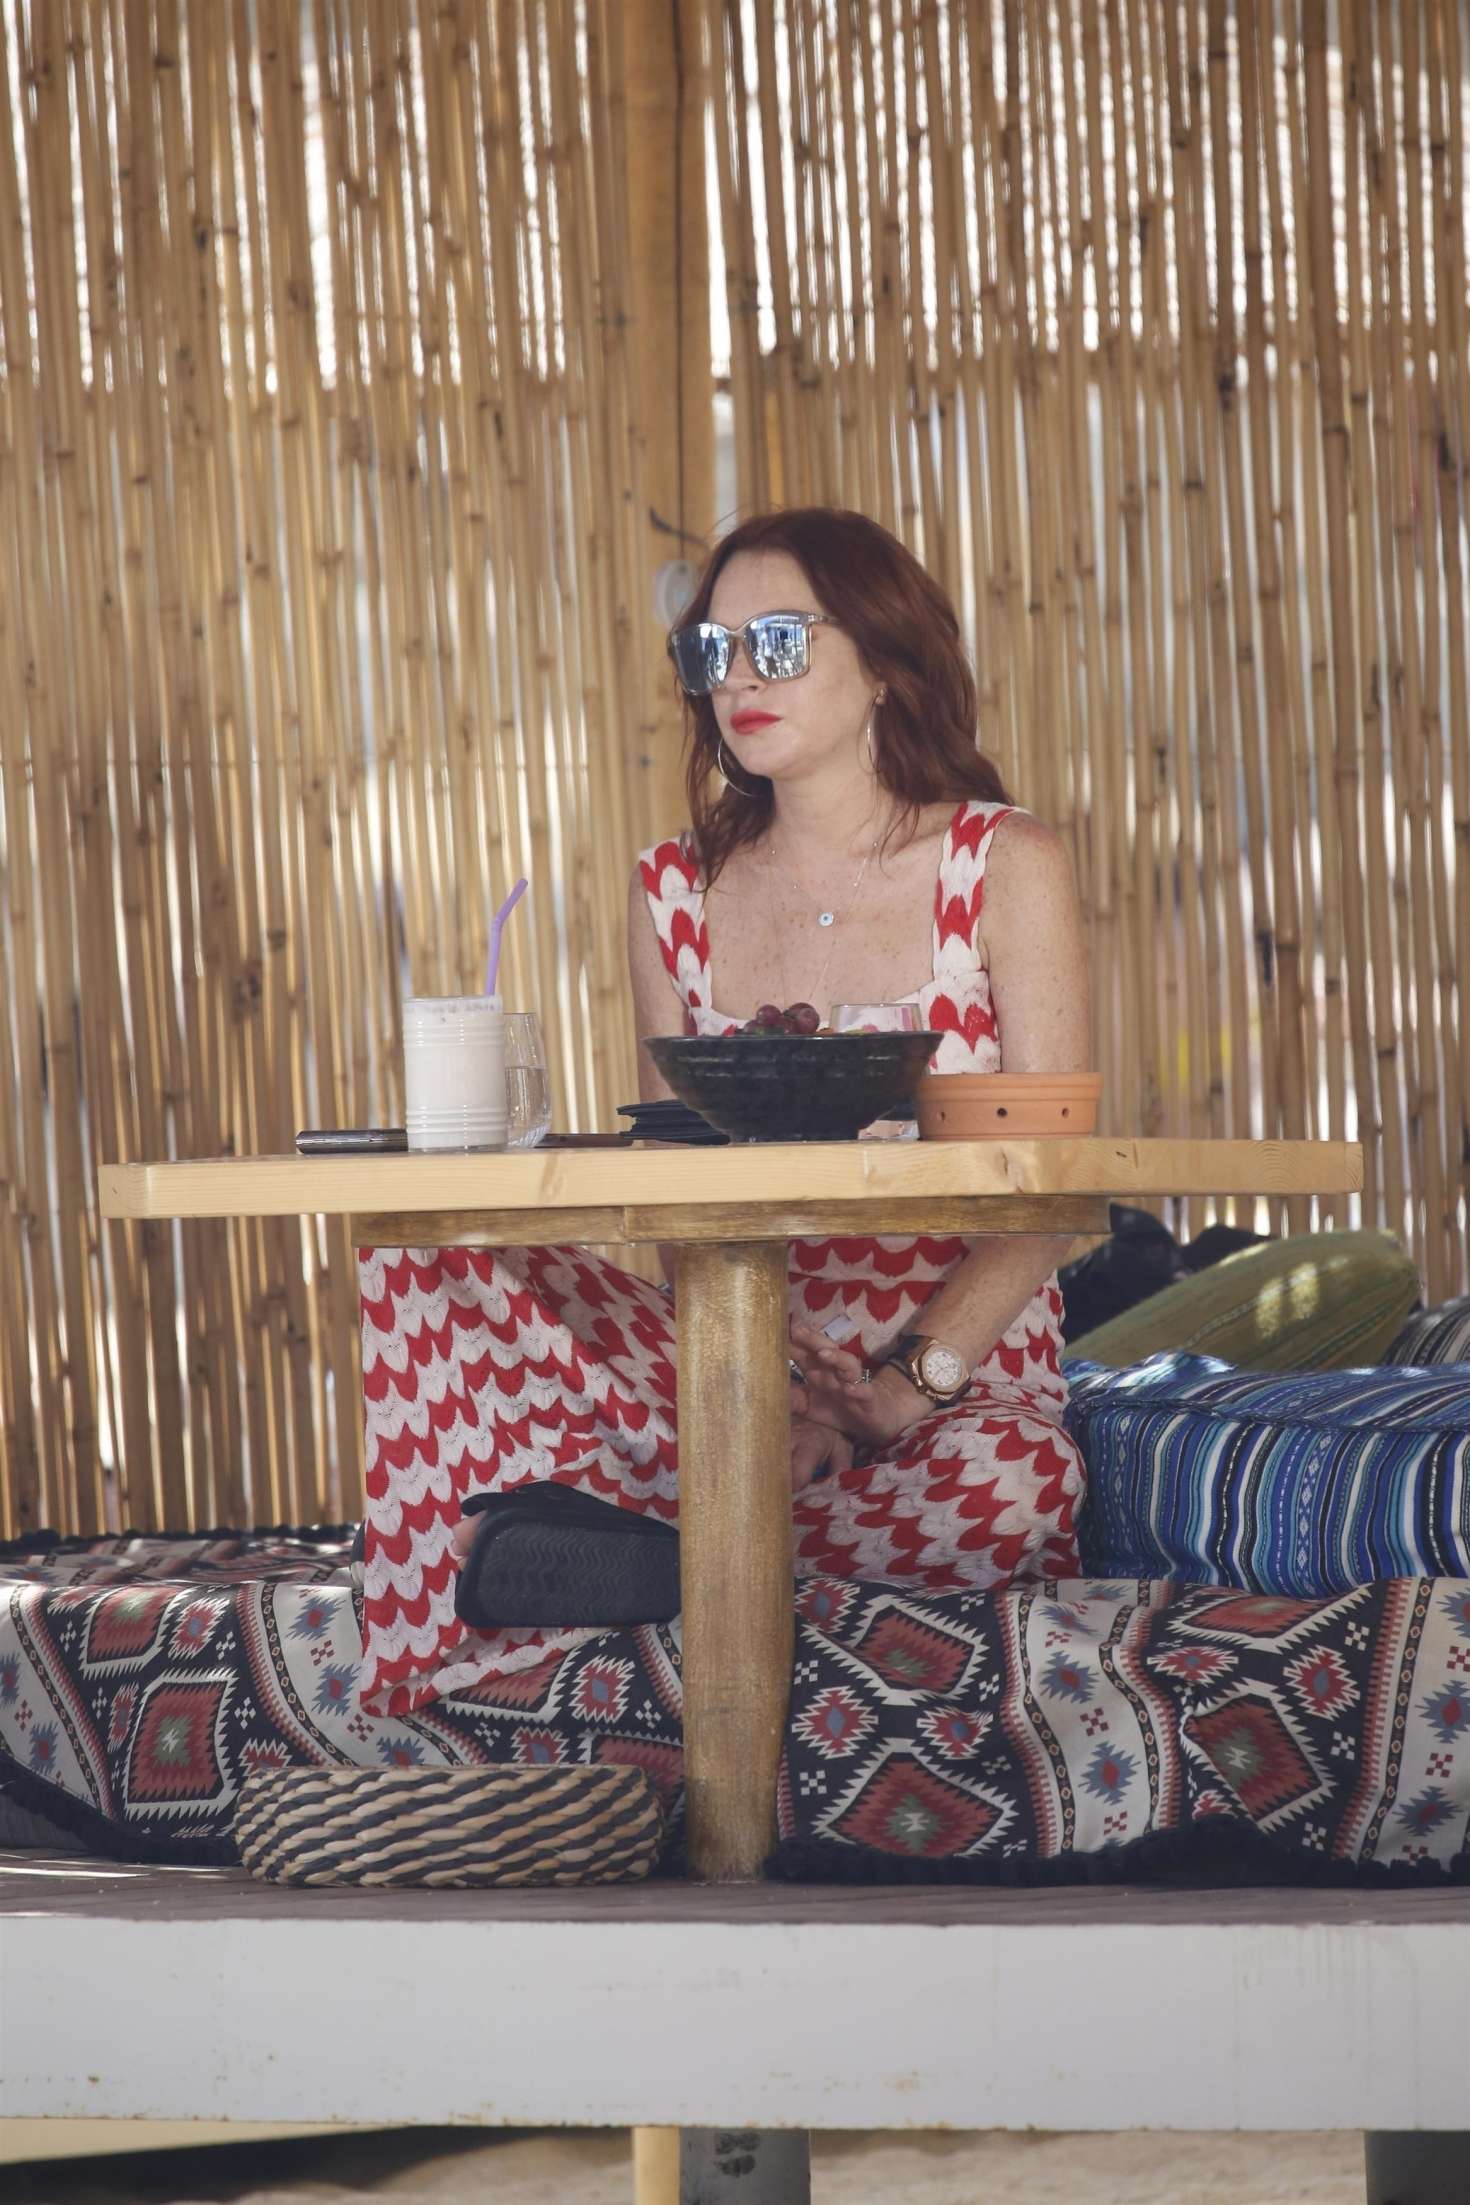 Lindsay Lohan at her beach club in Mykonos